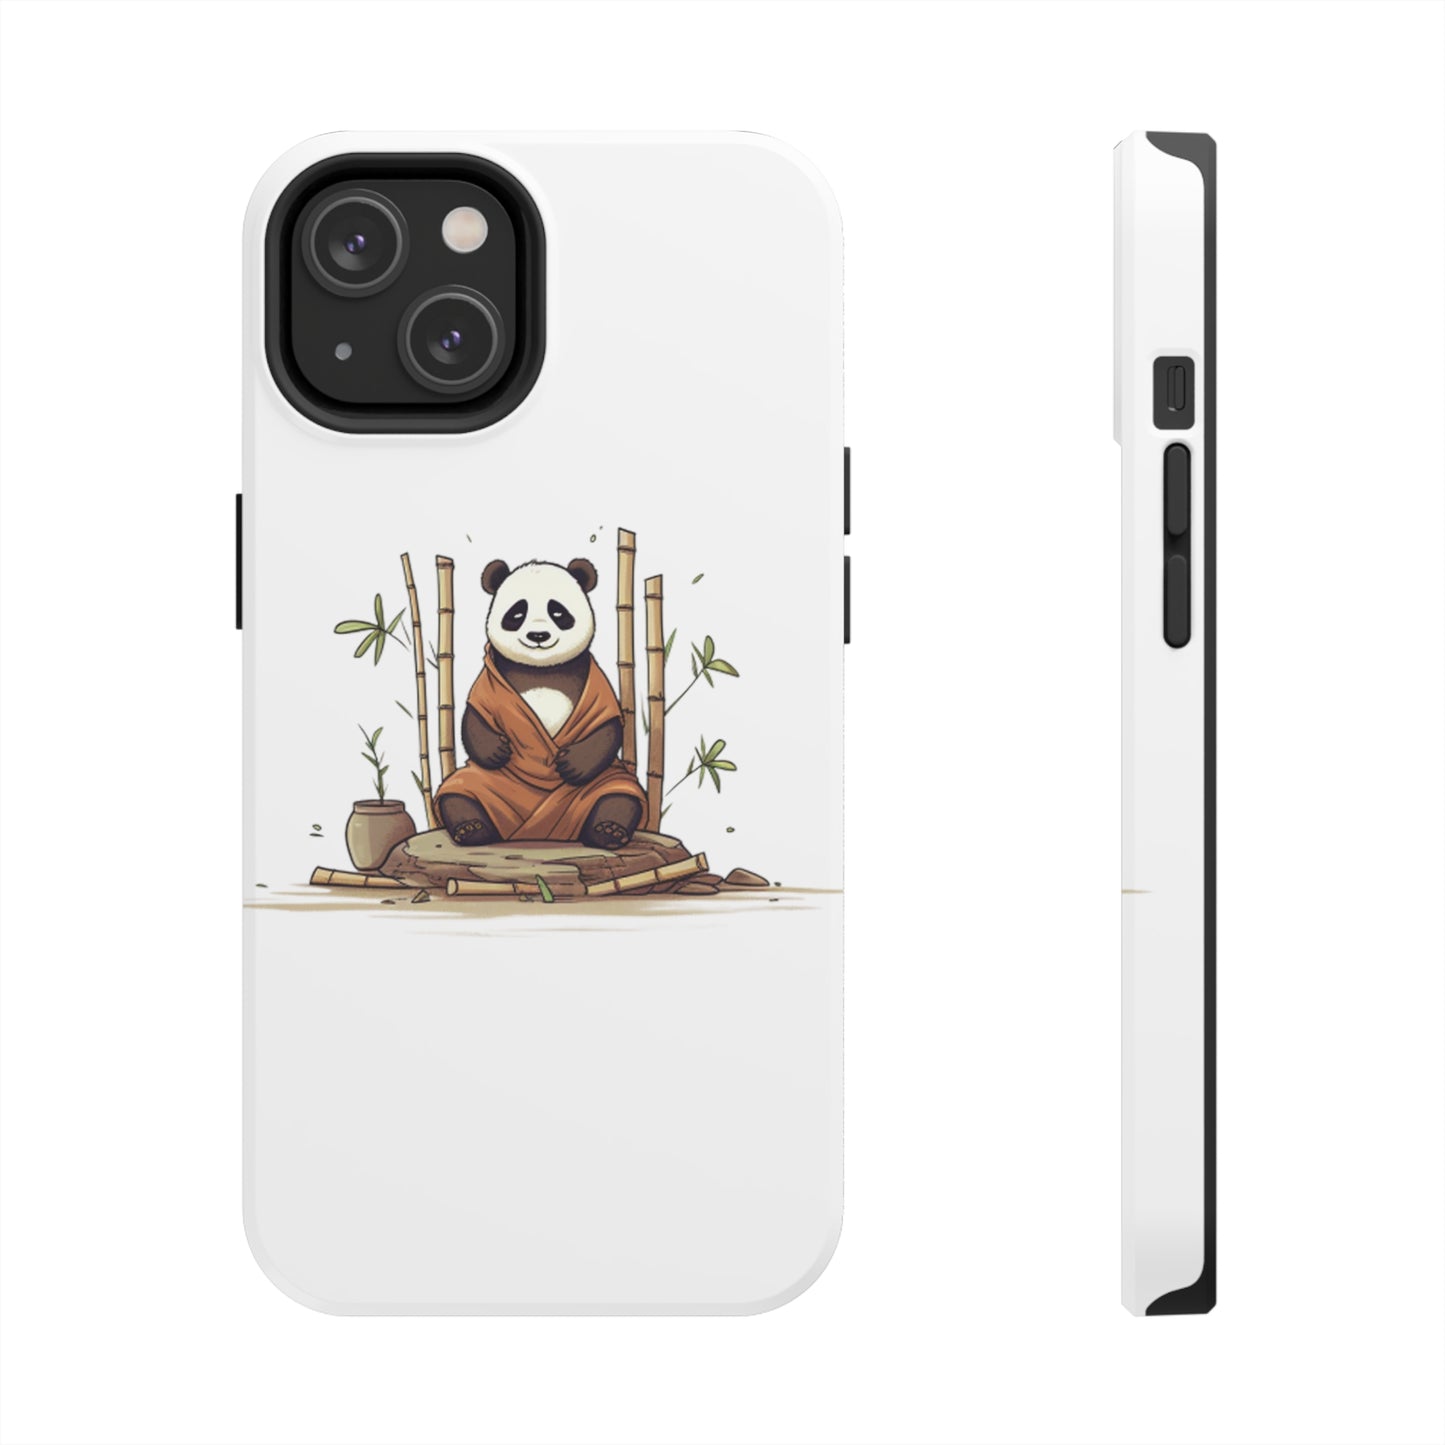 Tough Phone Cases: A Zen Comic Panda